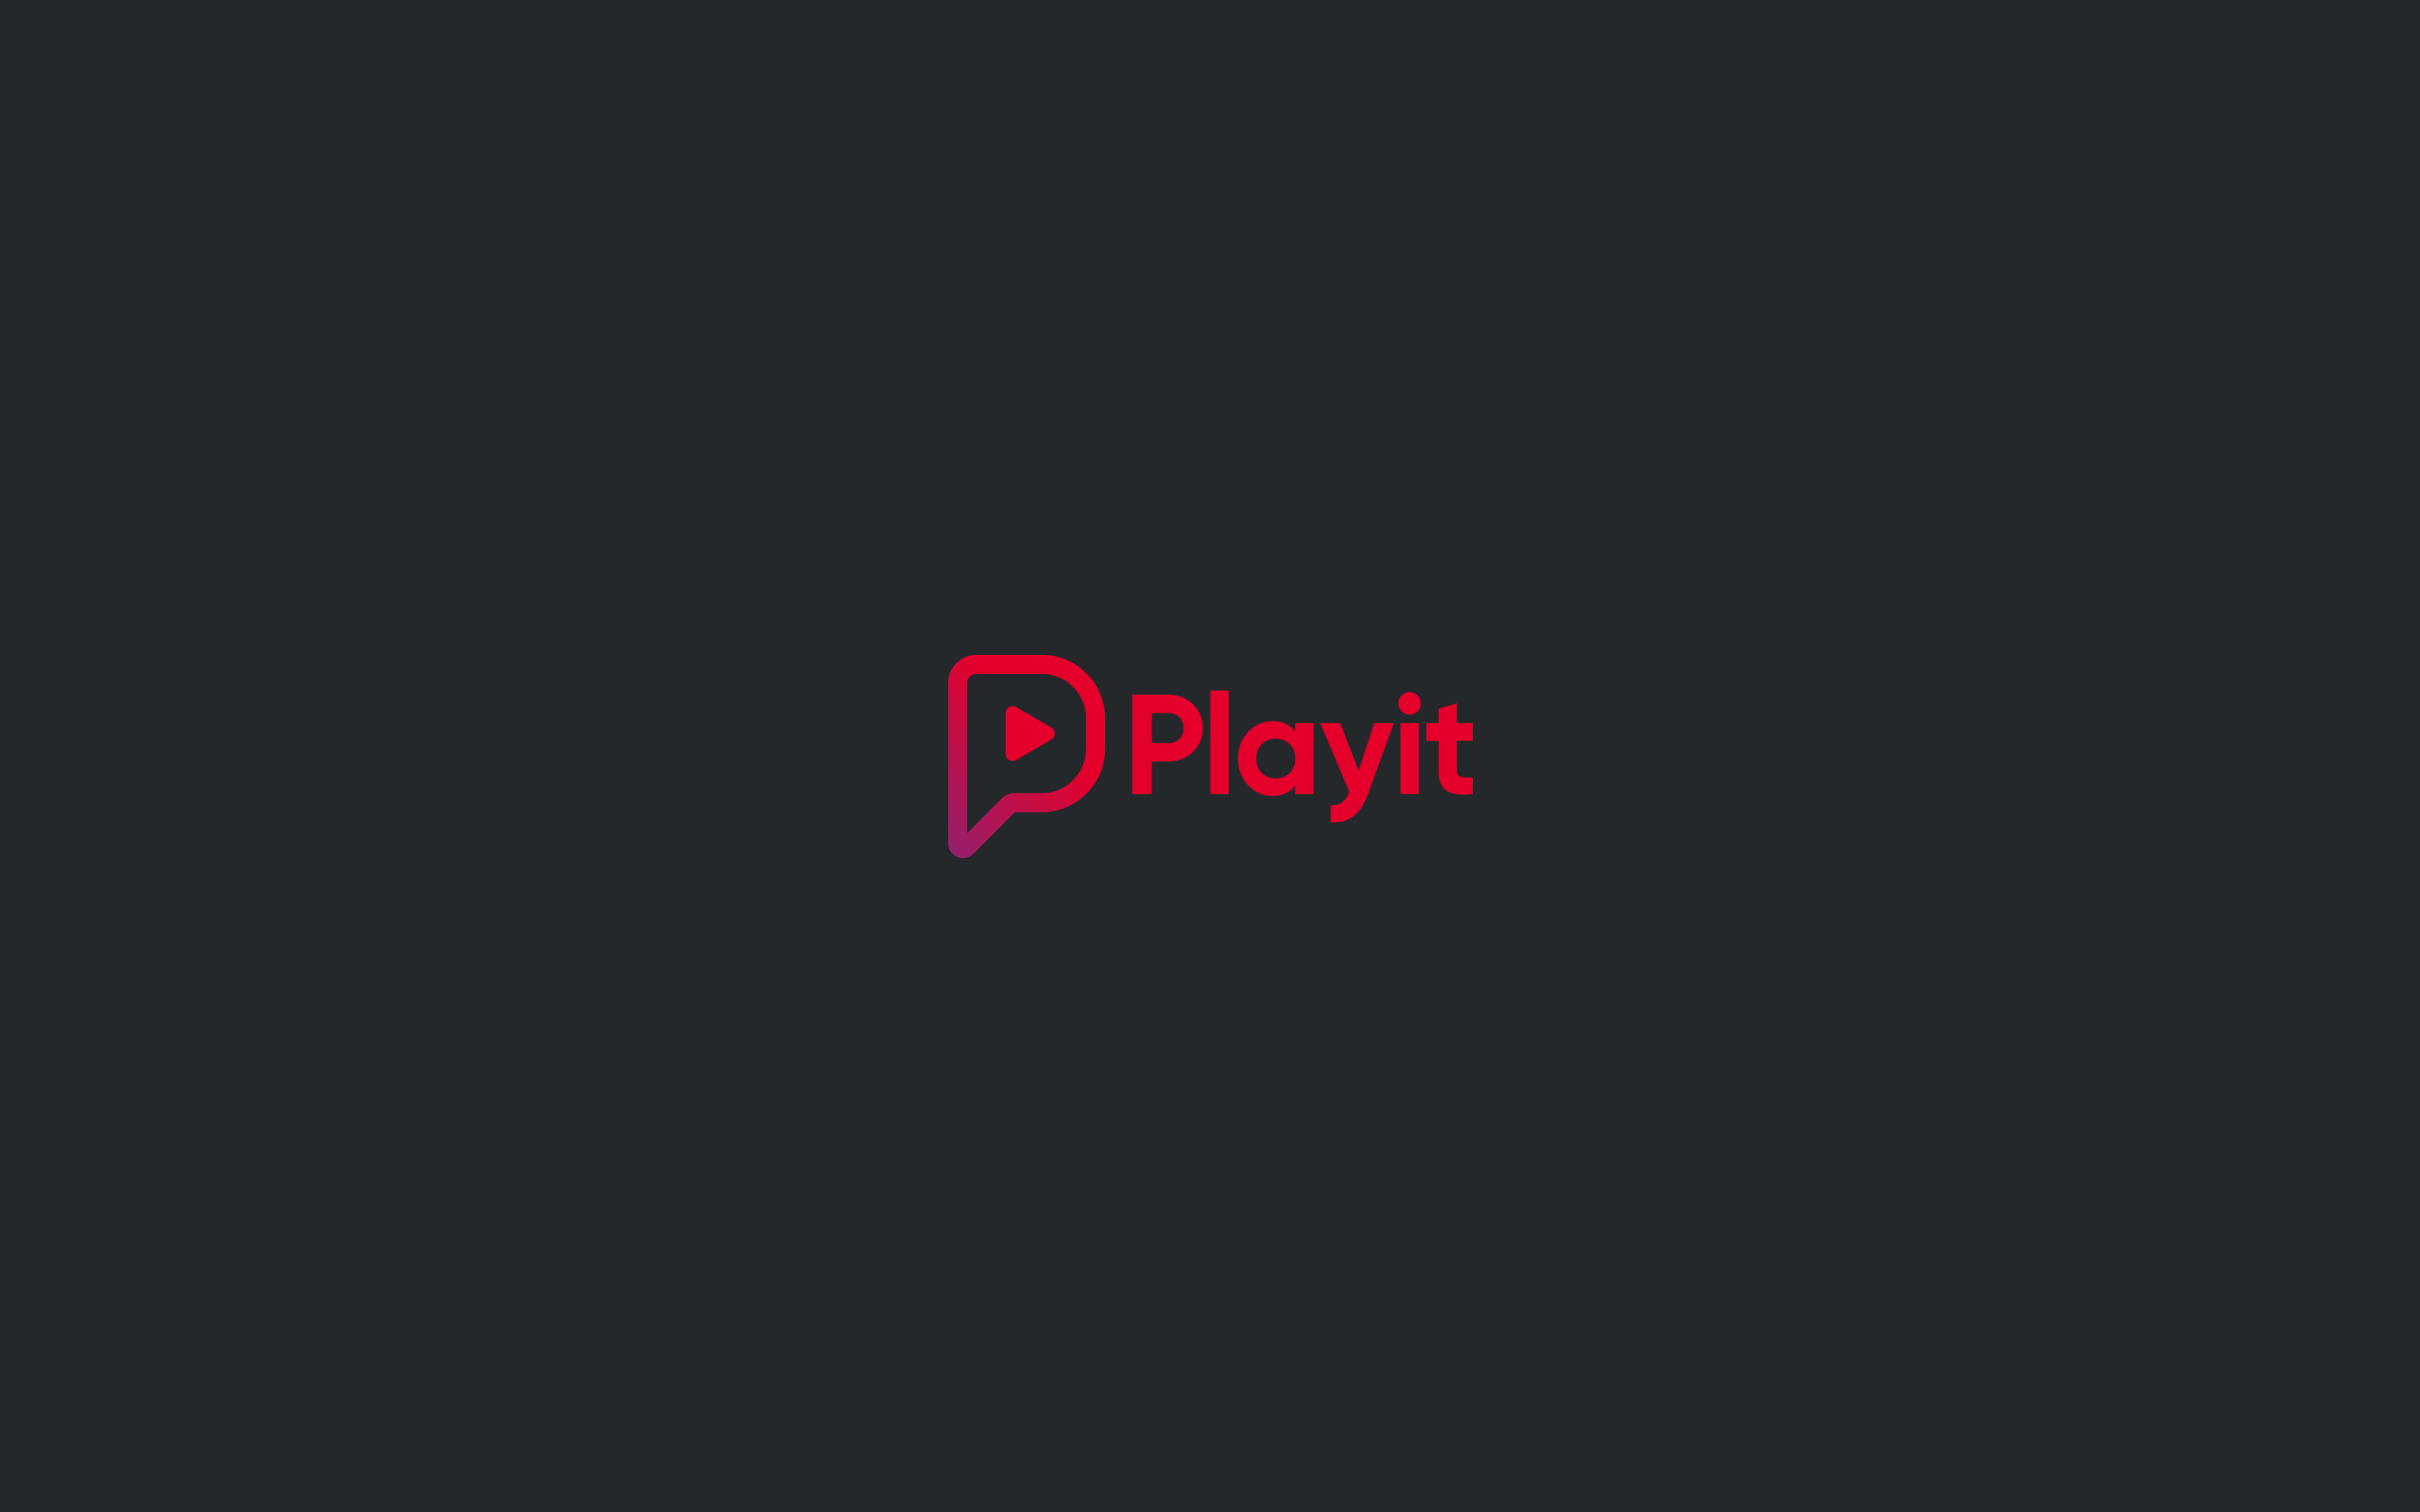 Playit logo